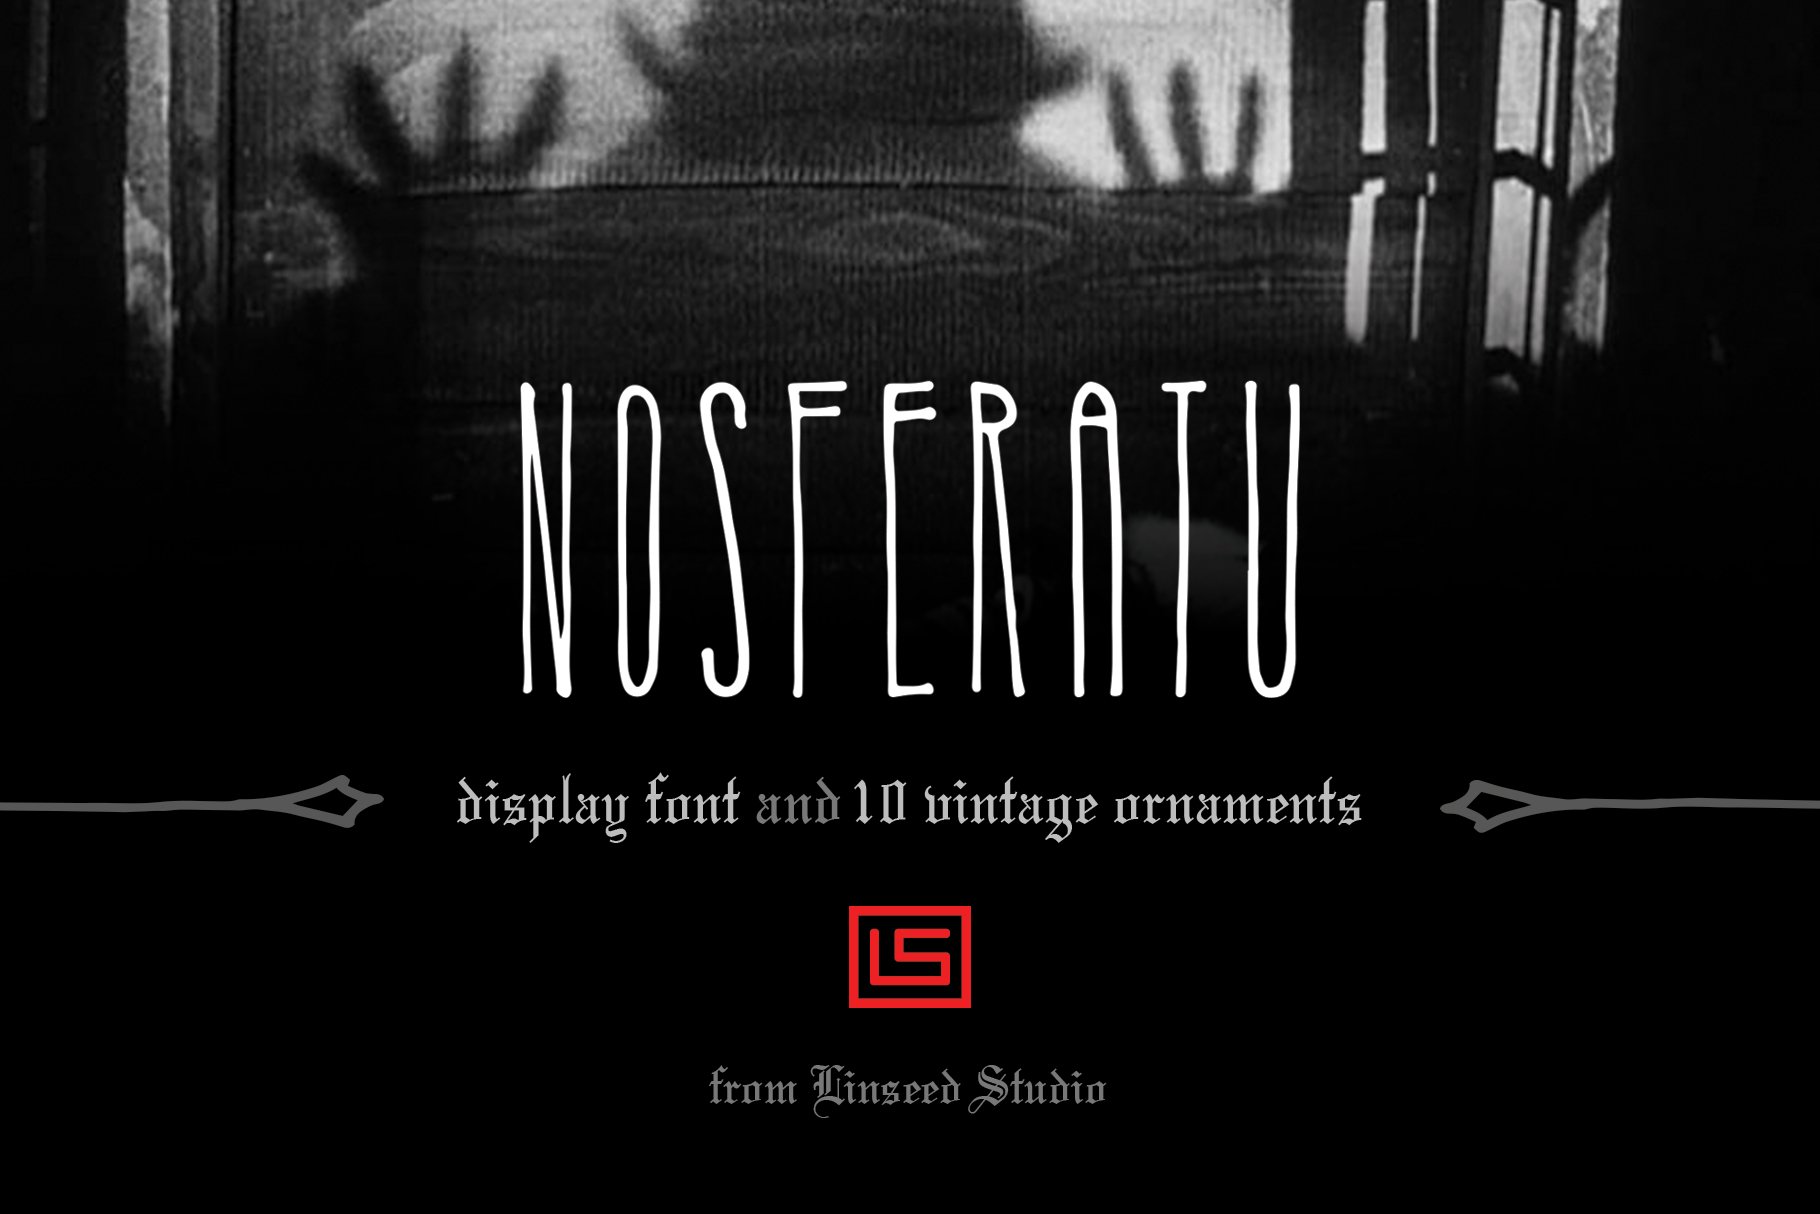 Nosferatu Display Font cover image.